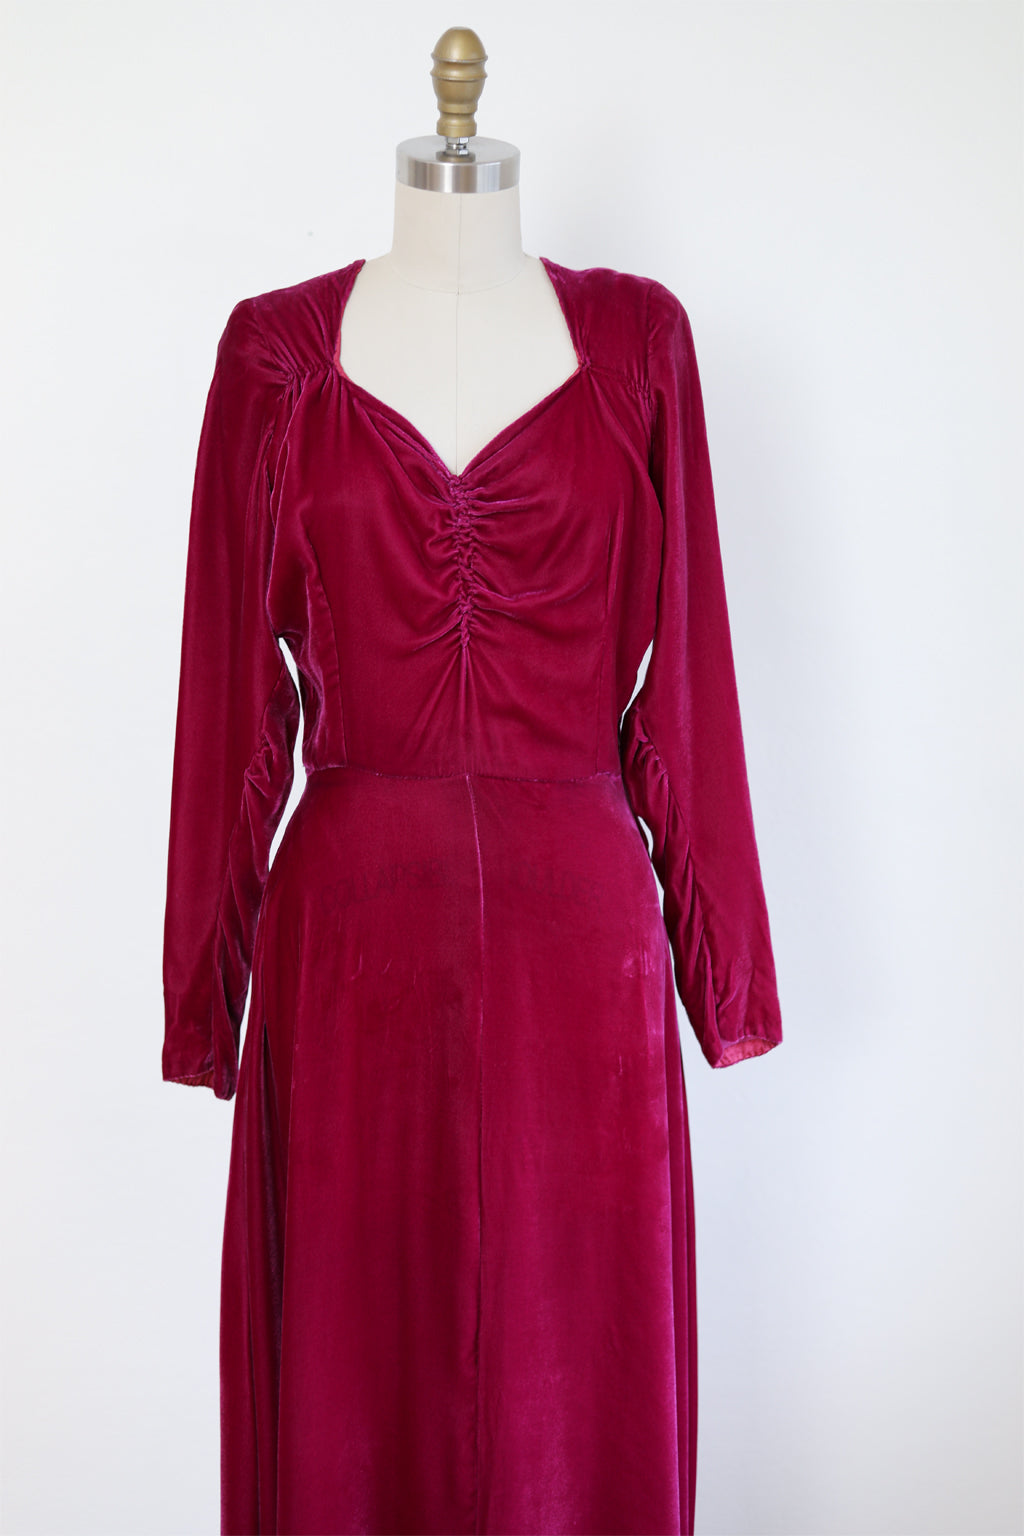 1940s Evening Gown in Progress – American Duchess Blog